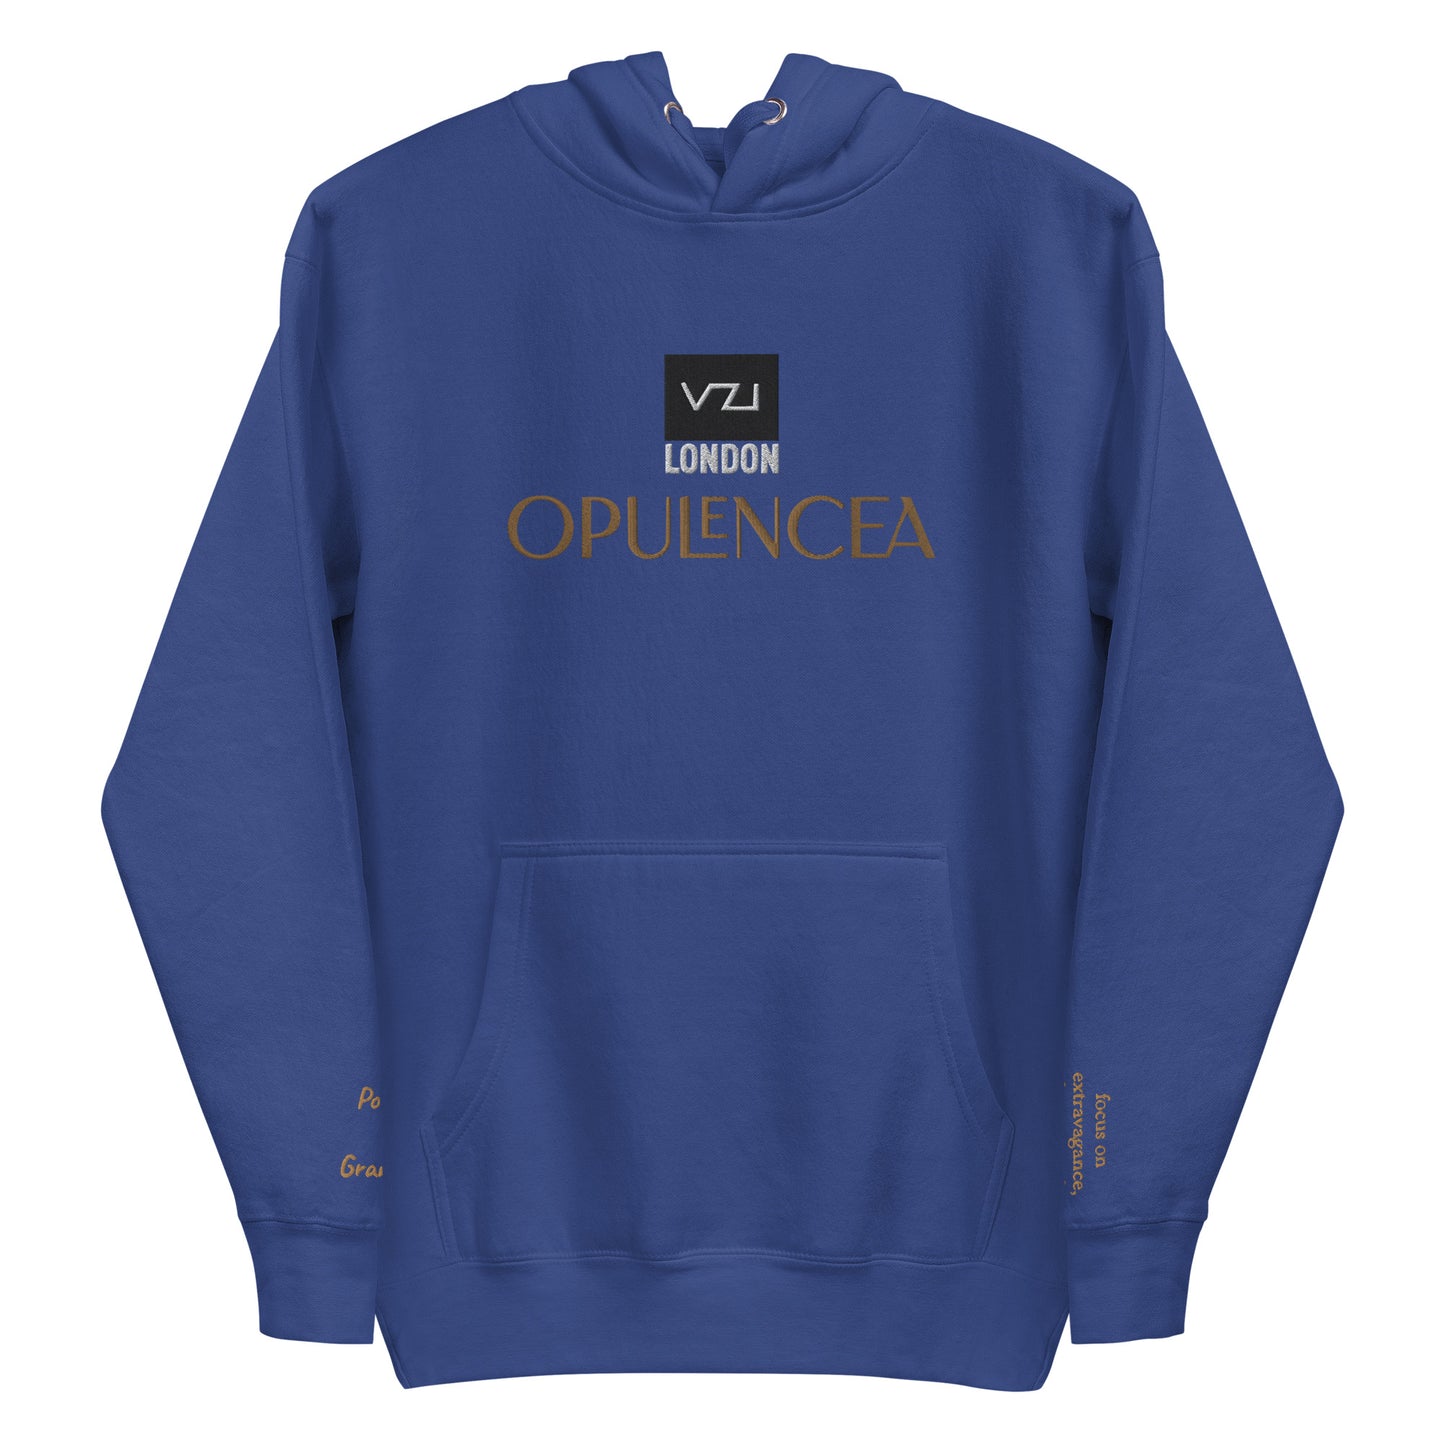 FRONT BLUE VZI HOODIE Opulencea: Unisex, Classic Cotton: Focus on extravagance, luxury, and indulgence(Posh Grandeur)